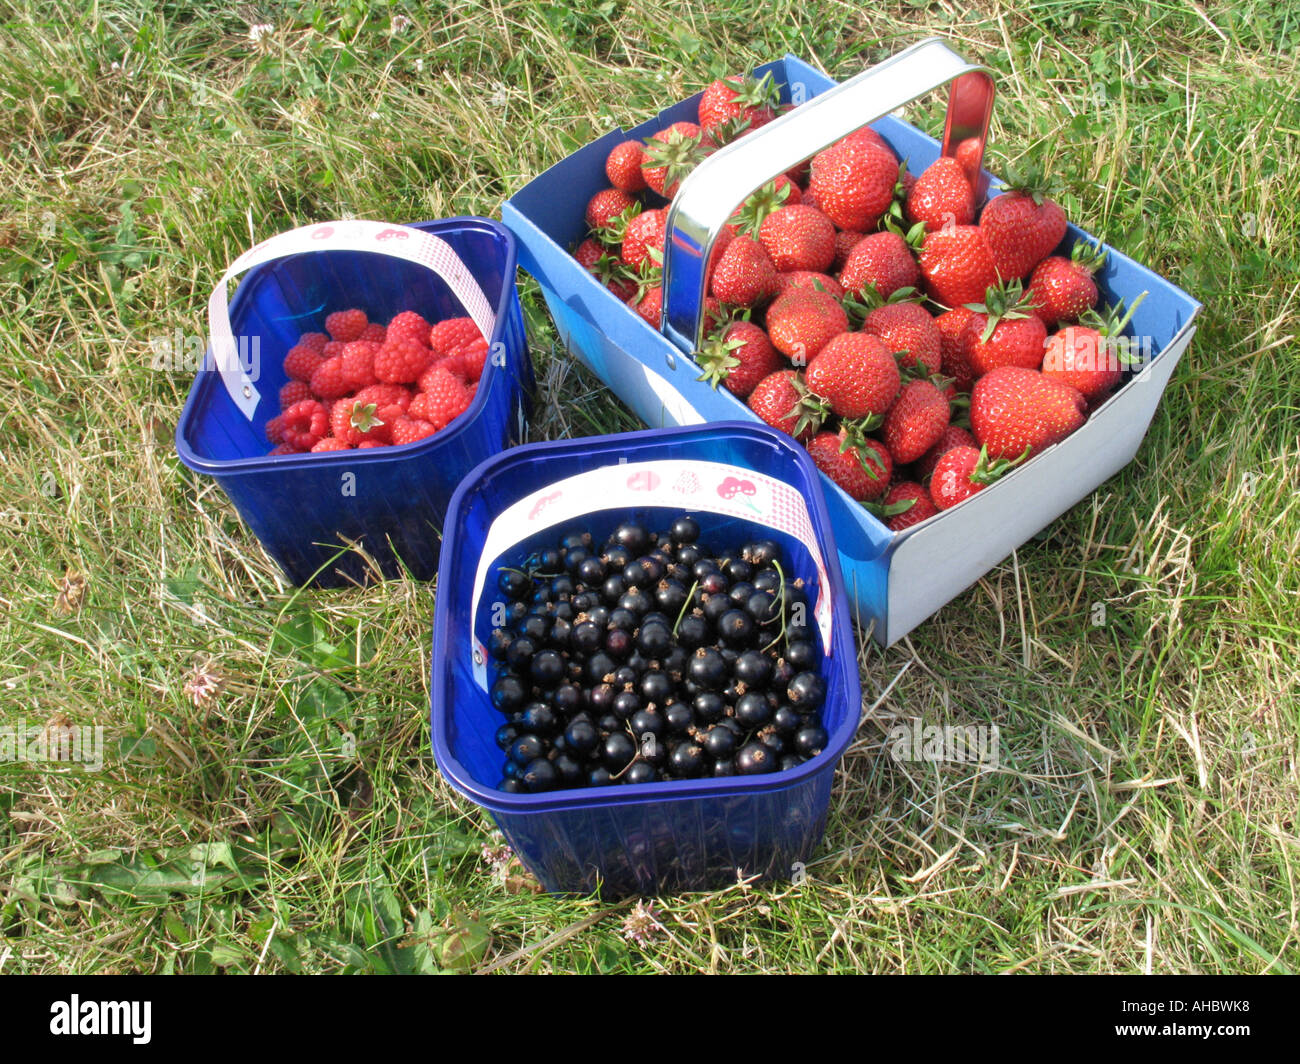 Baskets of freshly picked strawberries, raspberries (Rubus idaeus) and blackcurrants (Ribes nigrum) Stock Photo